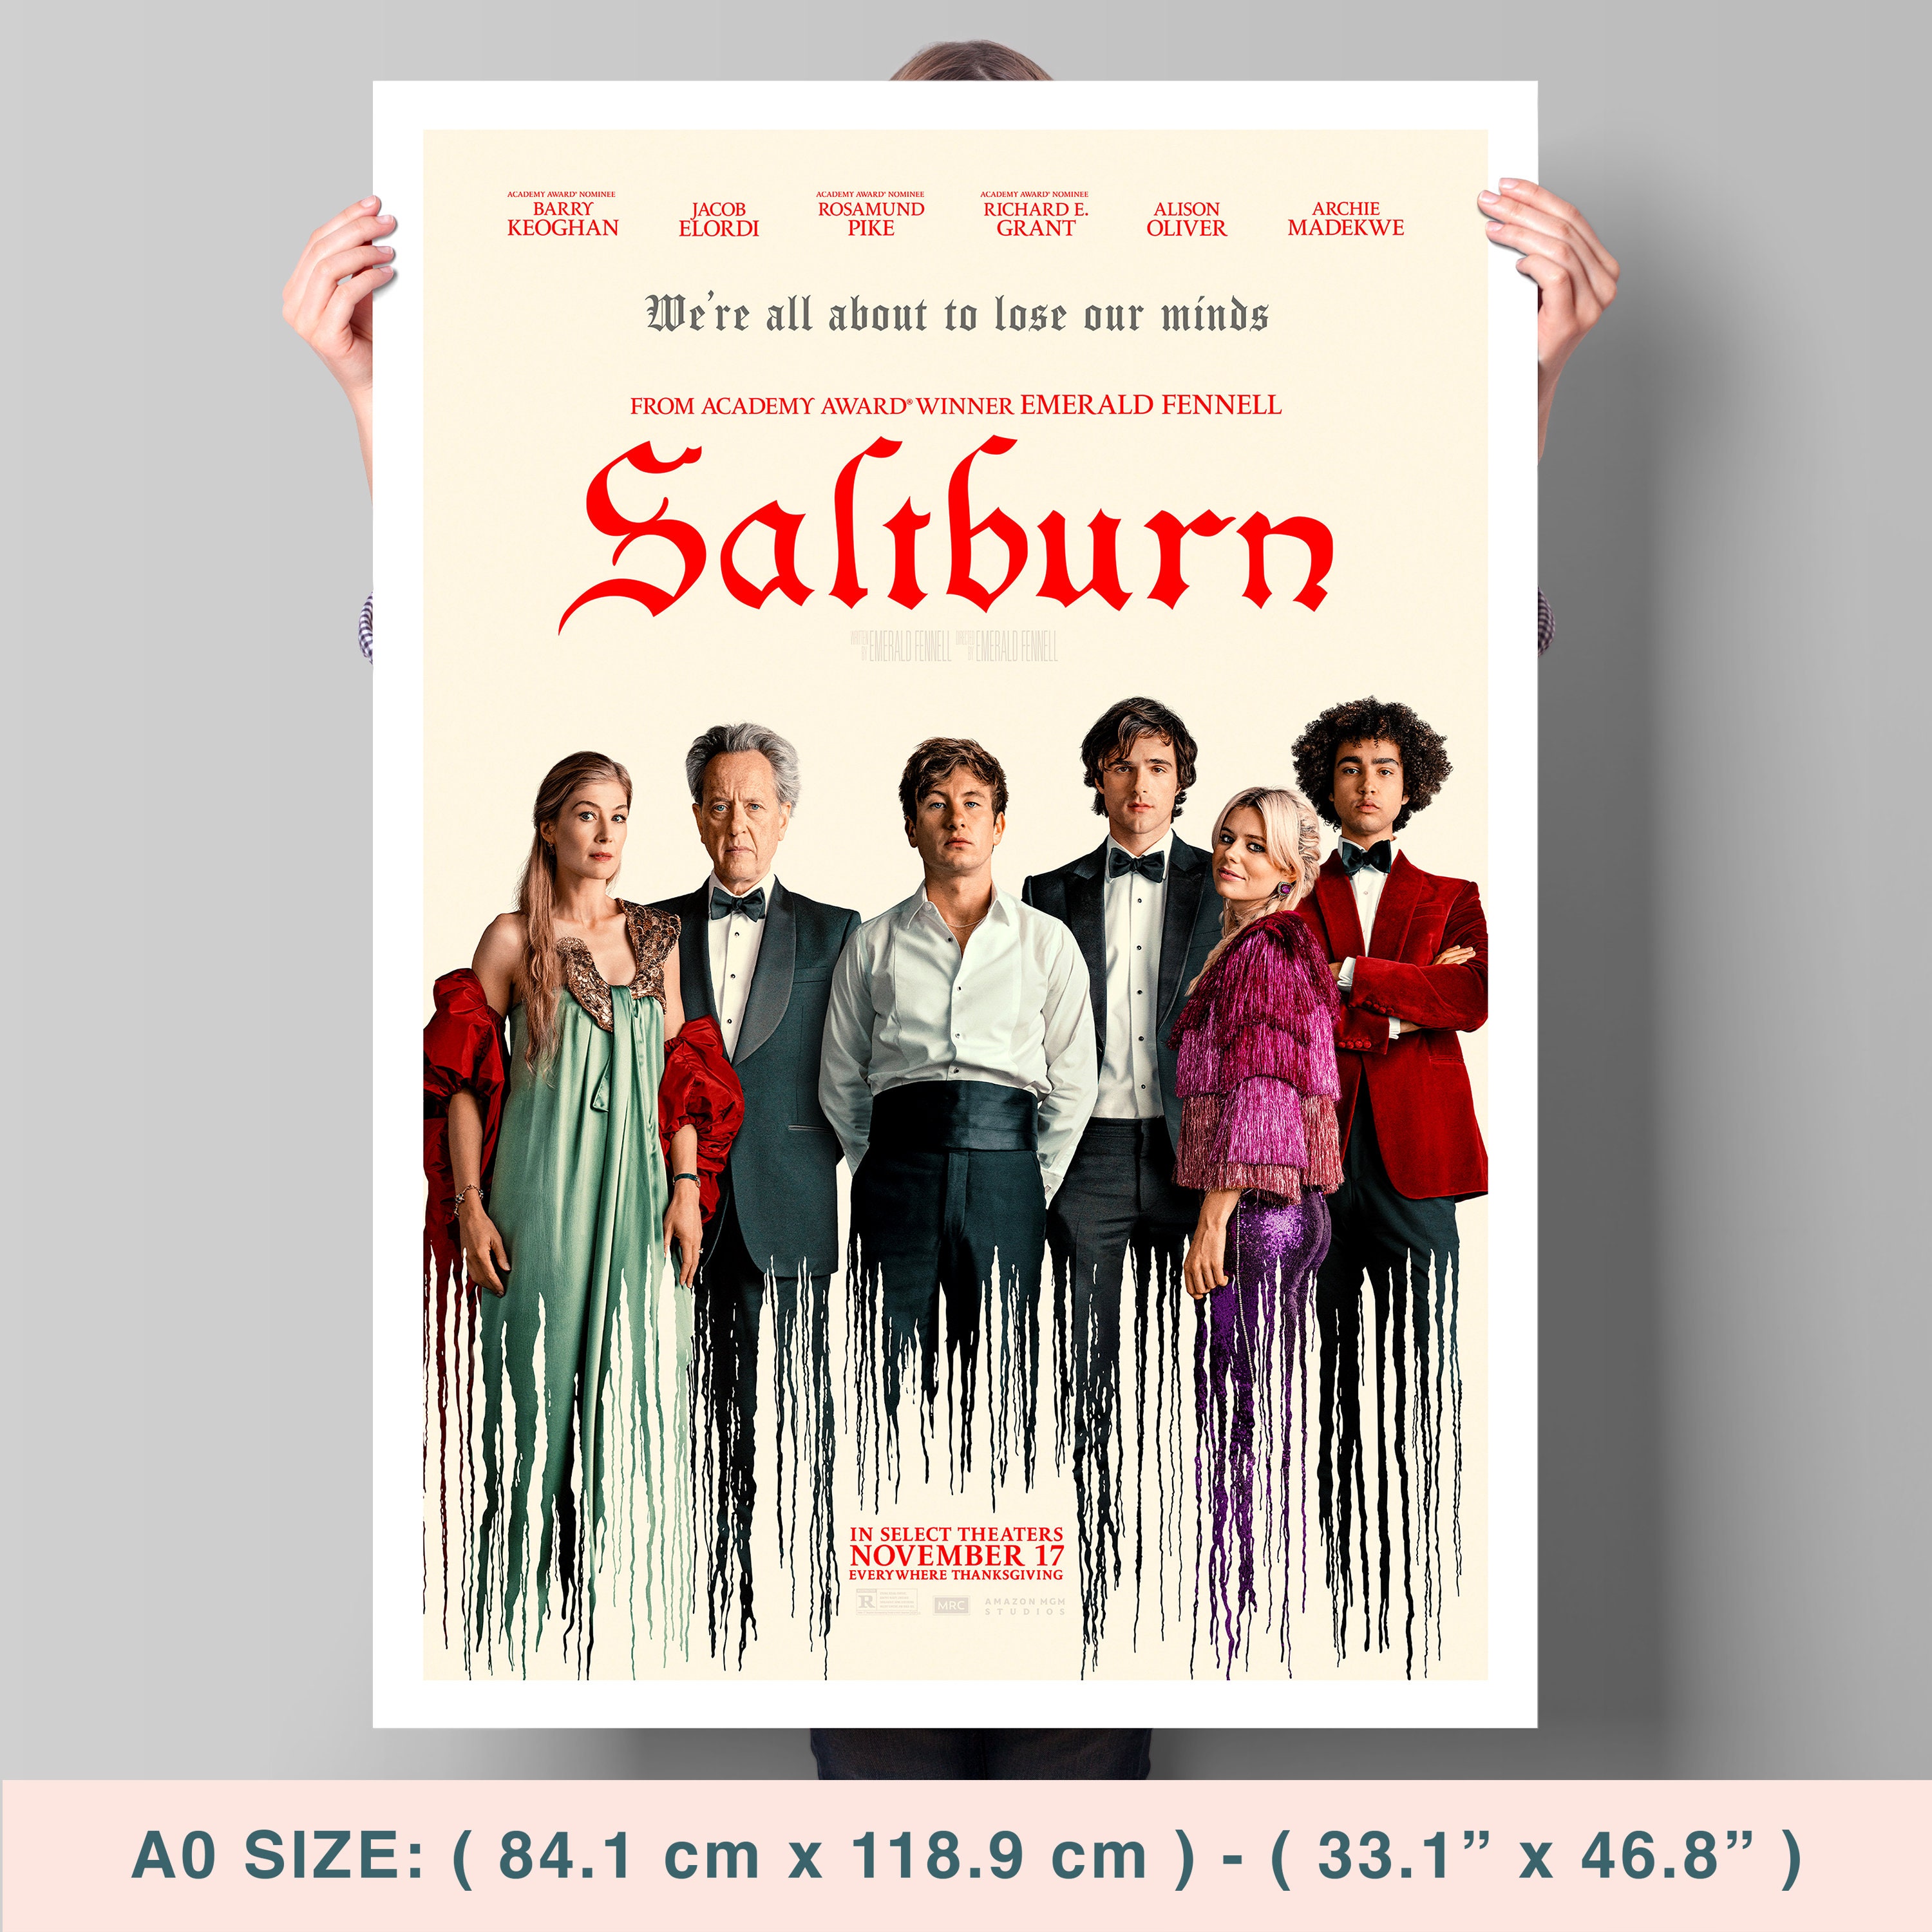 Saltburn' Poster – Jacob Elordi and Barry Keoghan Have Their Eyes on You -  IMDb